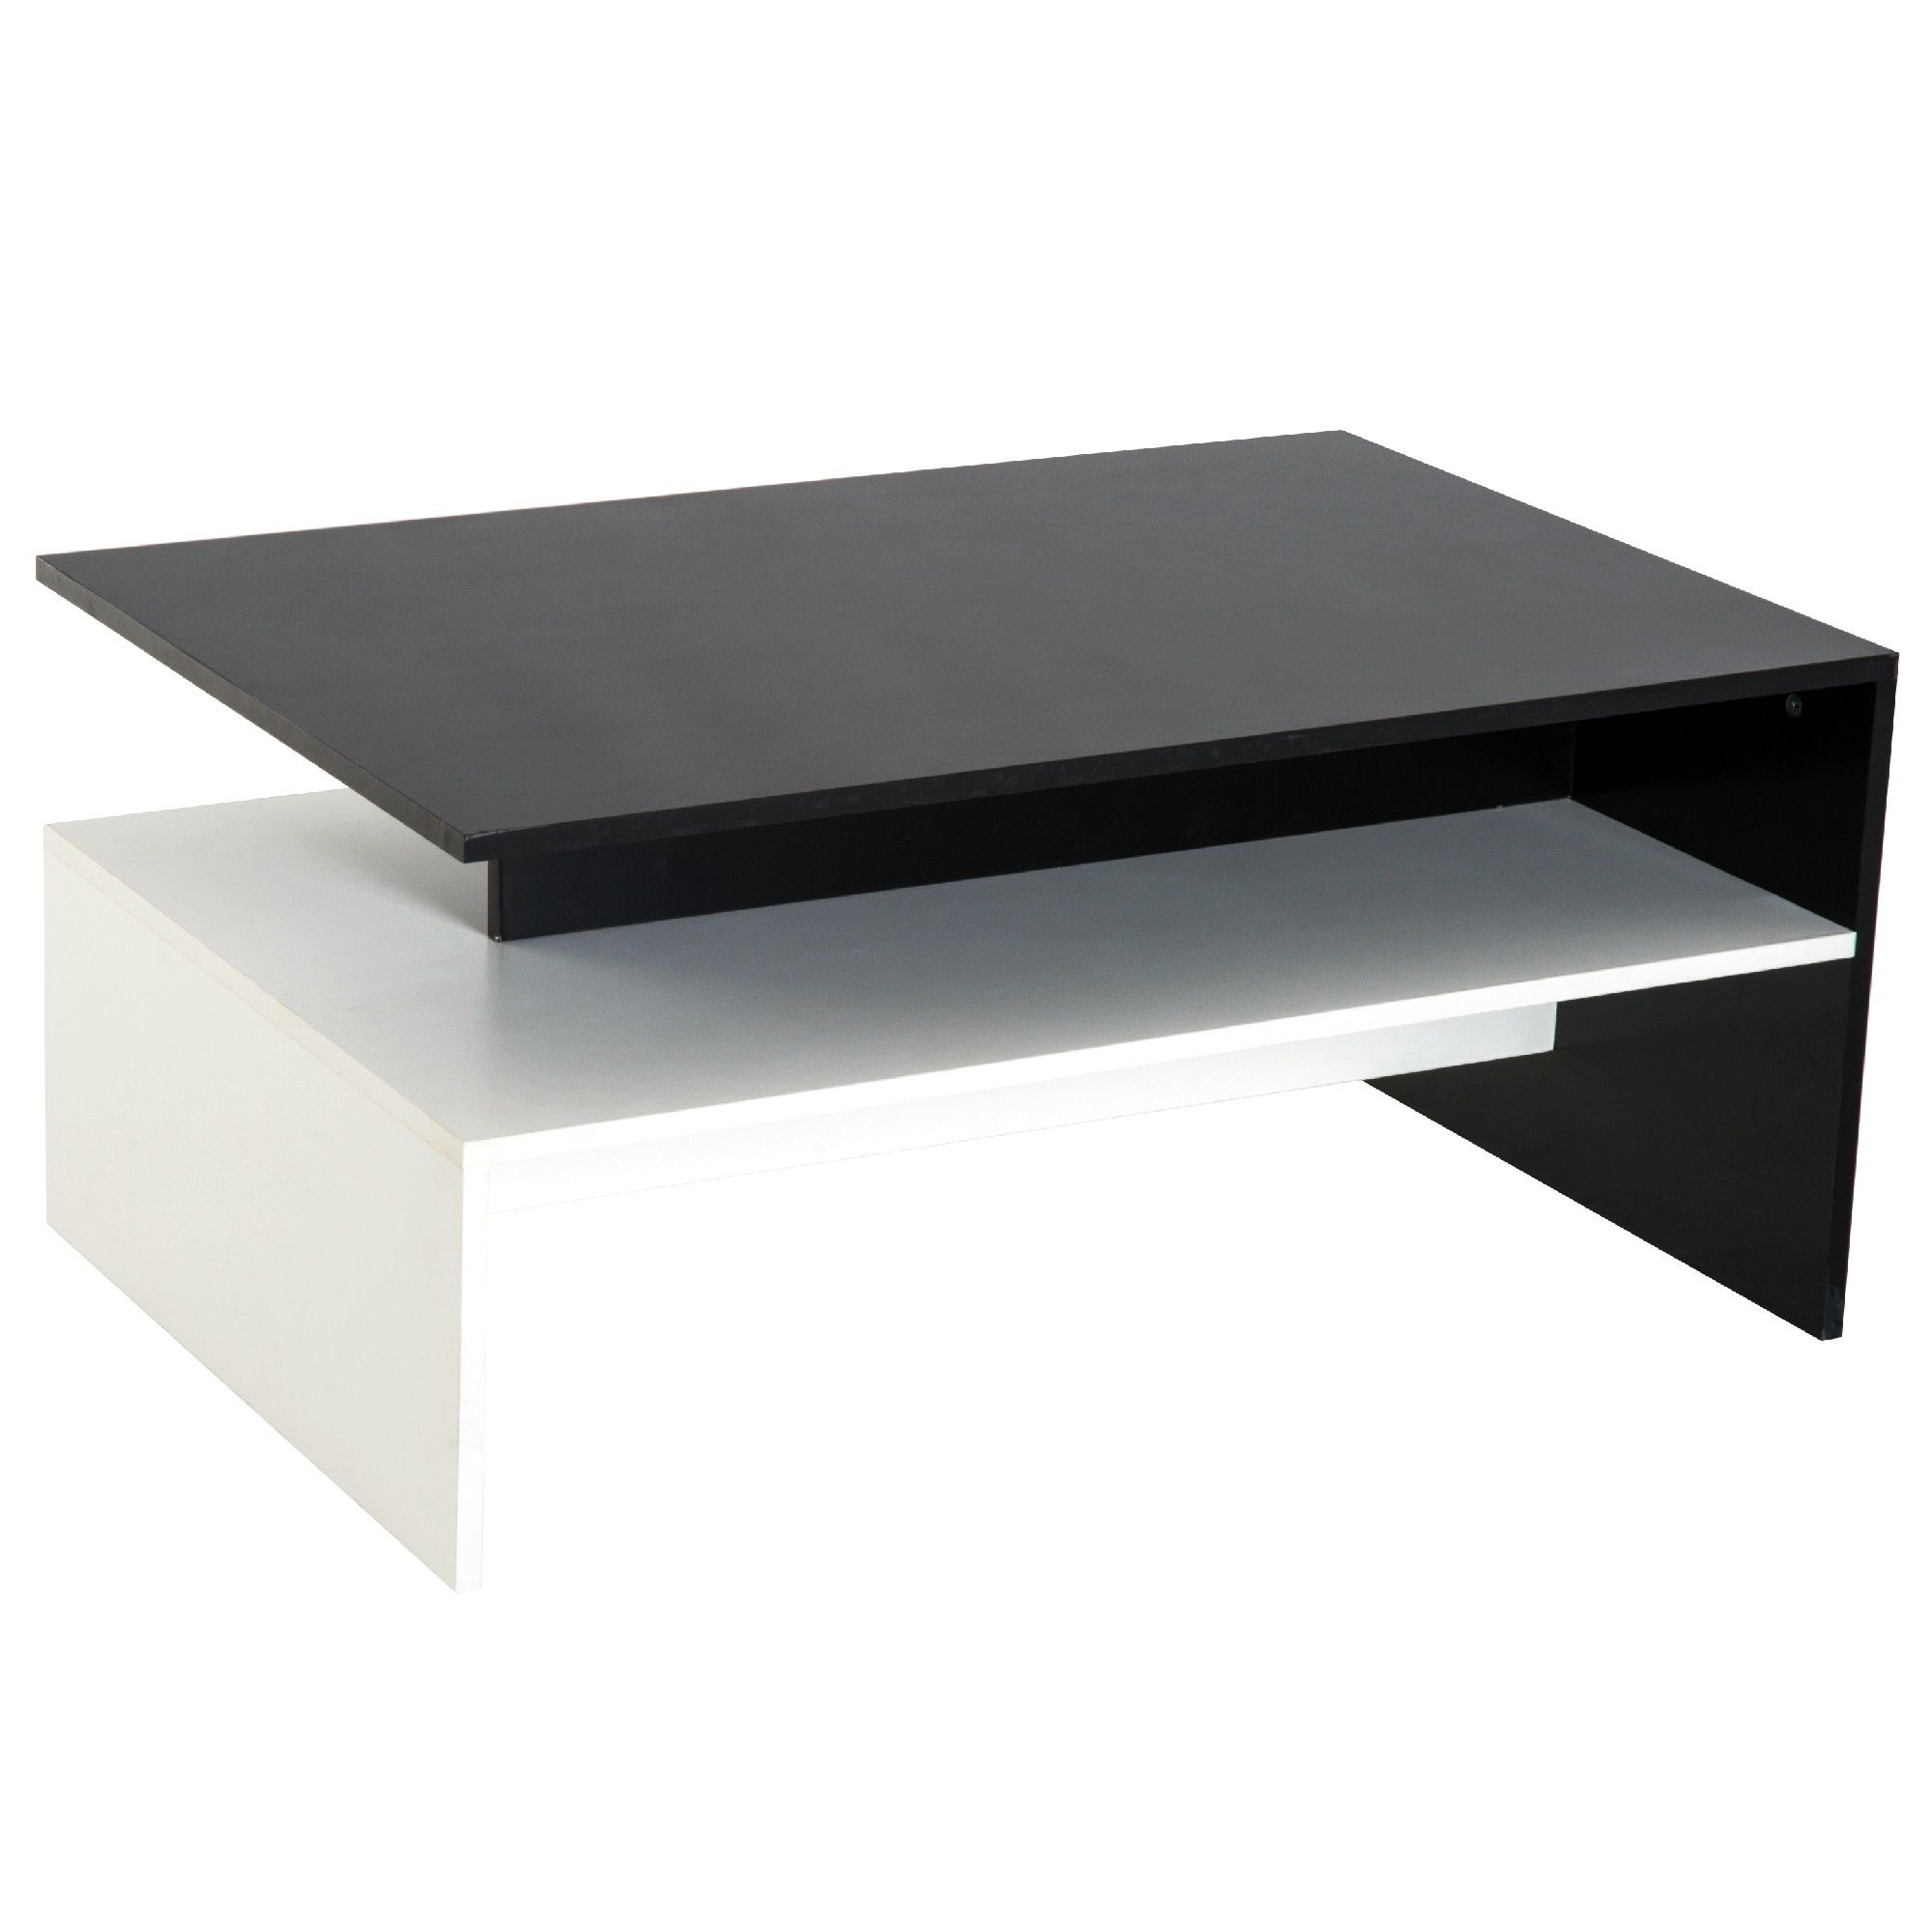 Homcom Minimalist Coffee Table Living Room W/ Storage Shelf|aosom (View 22 of 30)